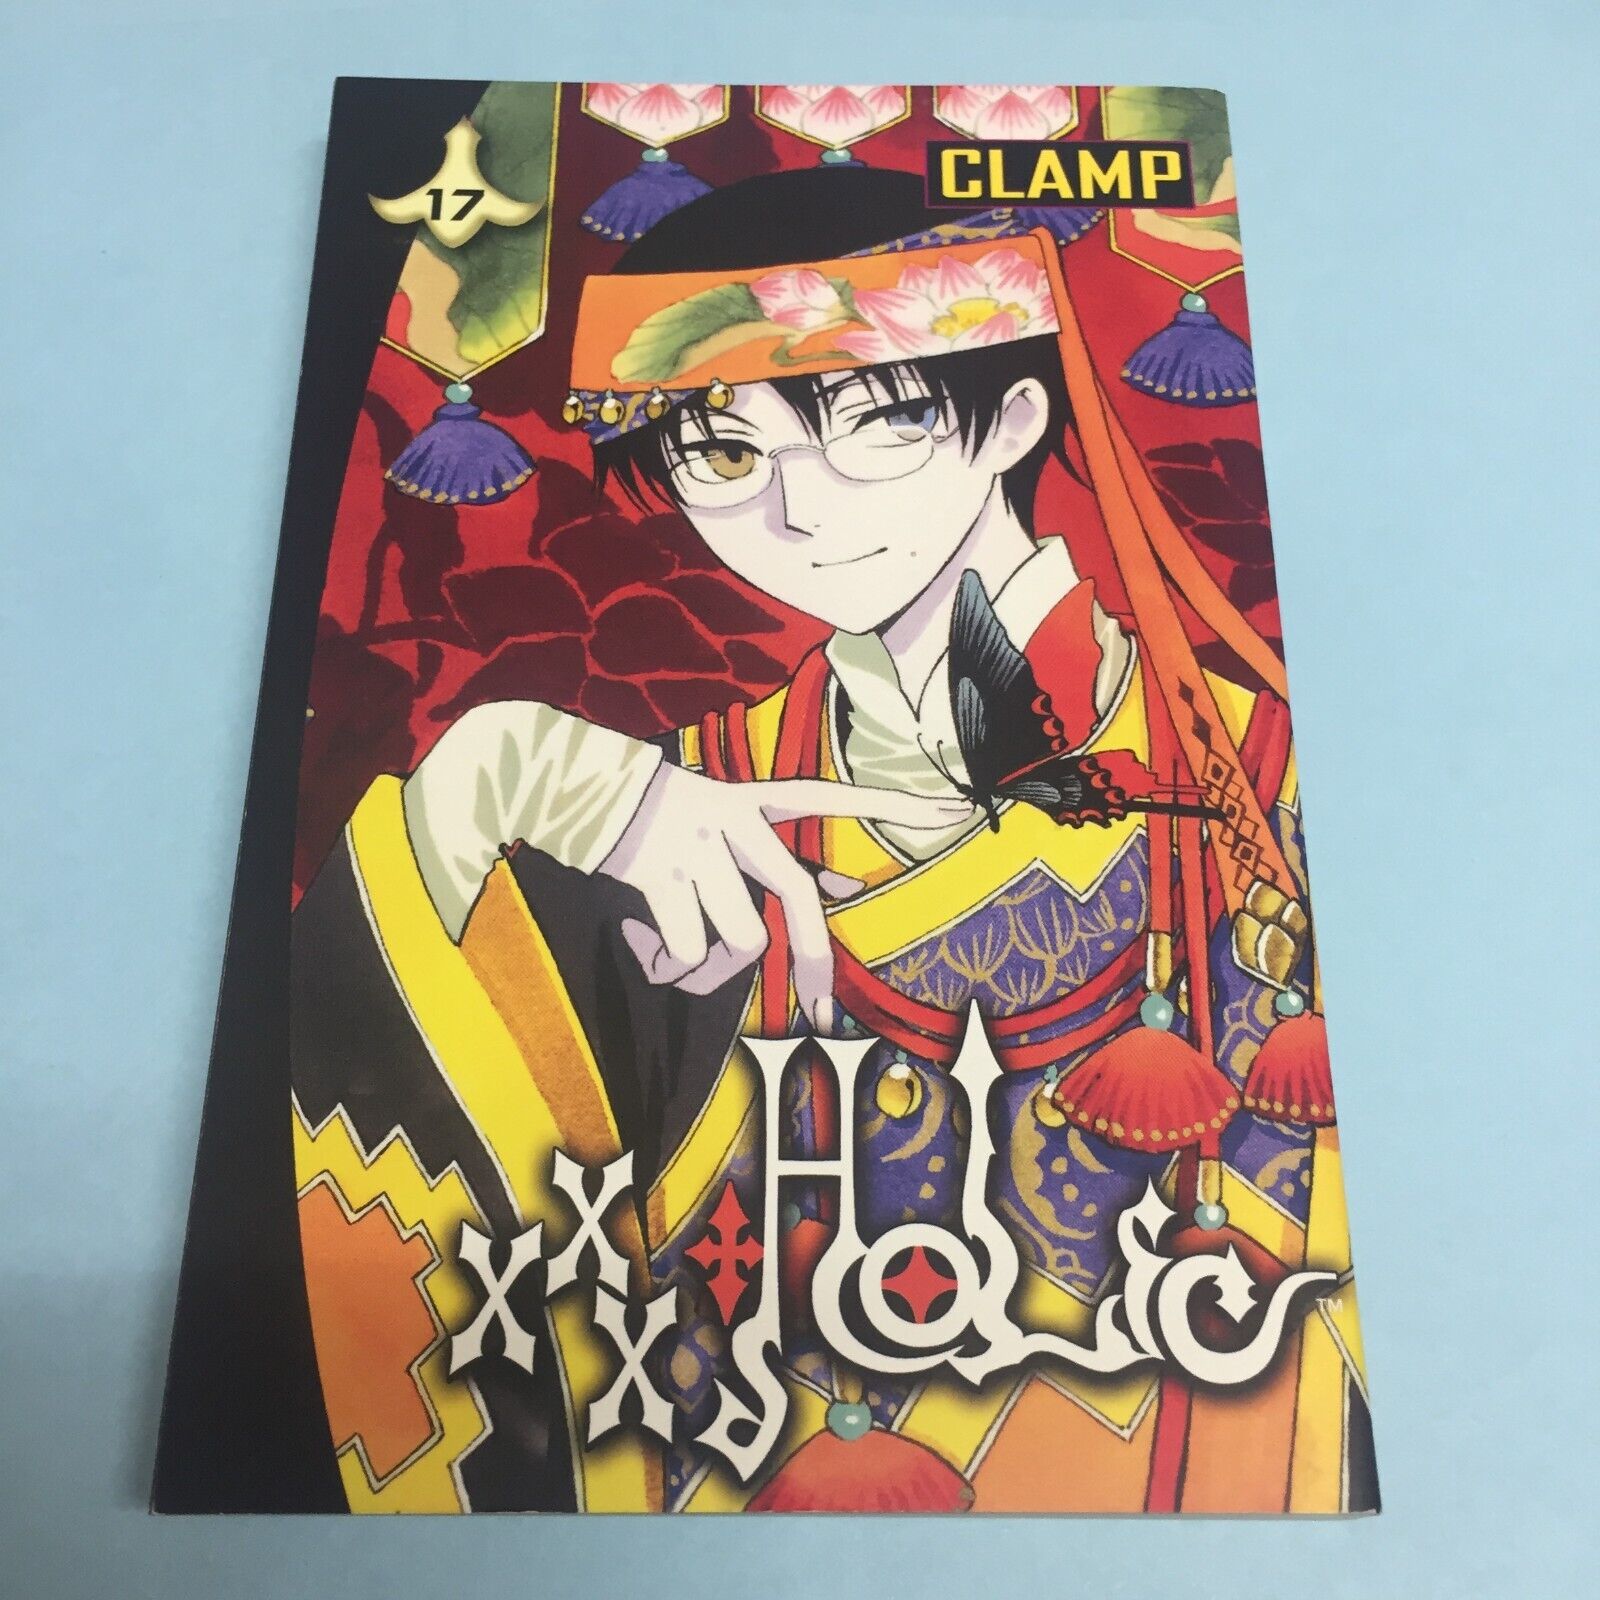 Xxx Holic XxxHolic Volume 17 Manga English Vol CLAMP Single